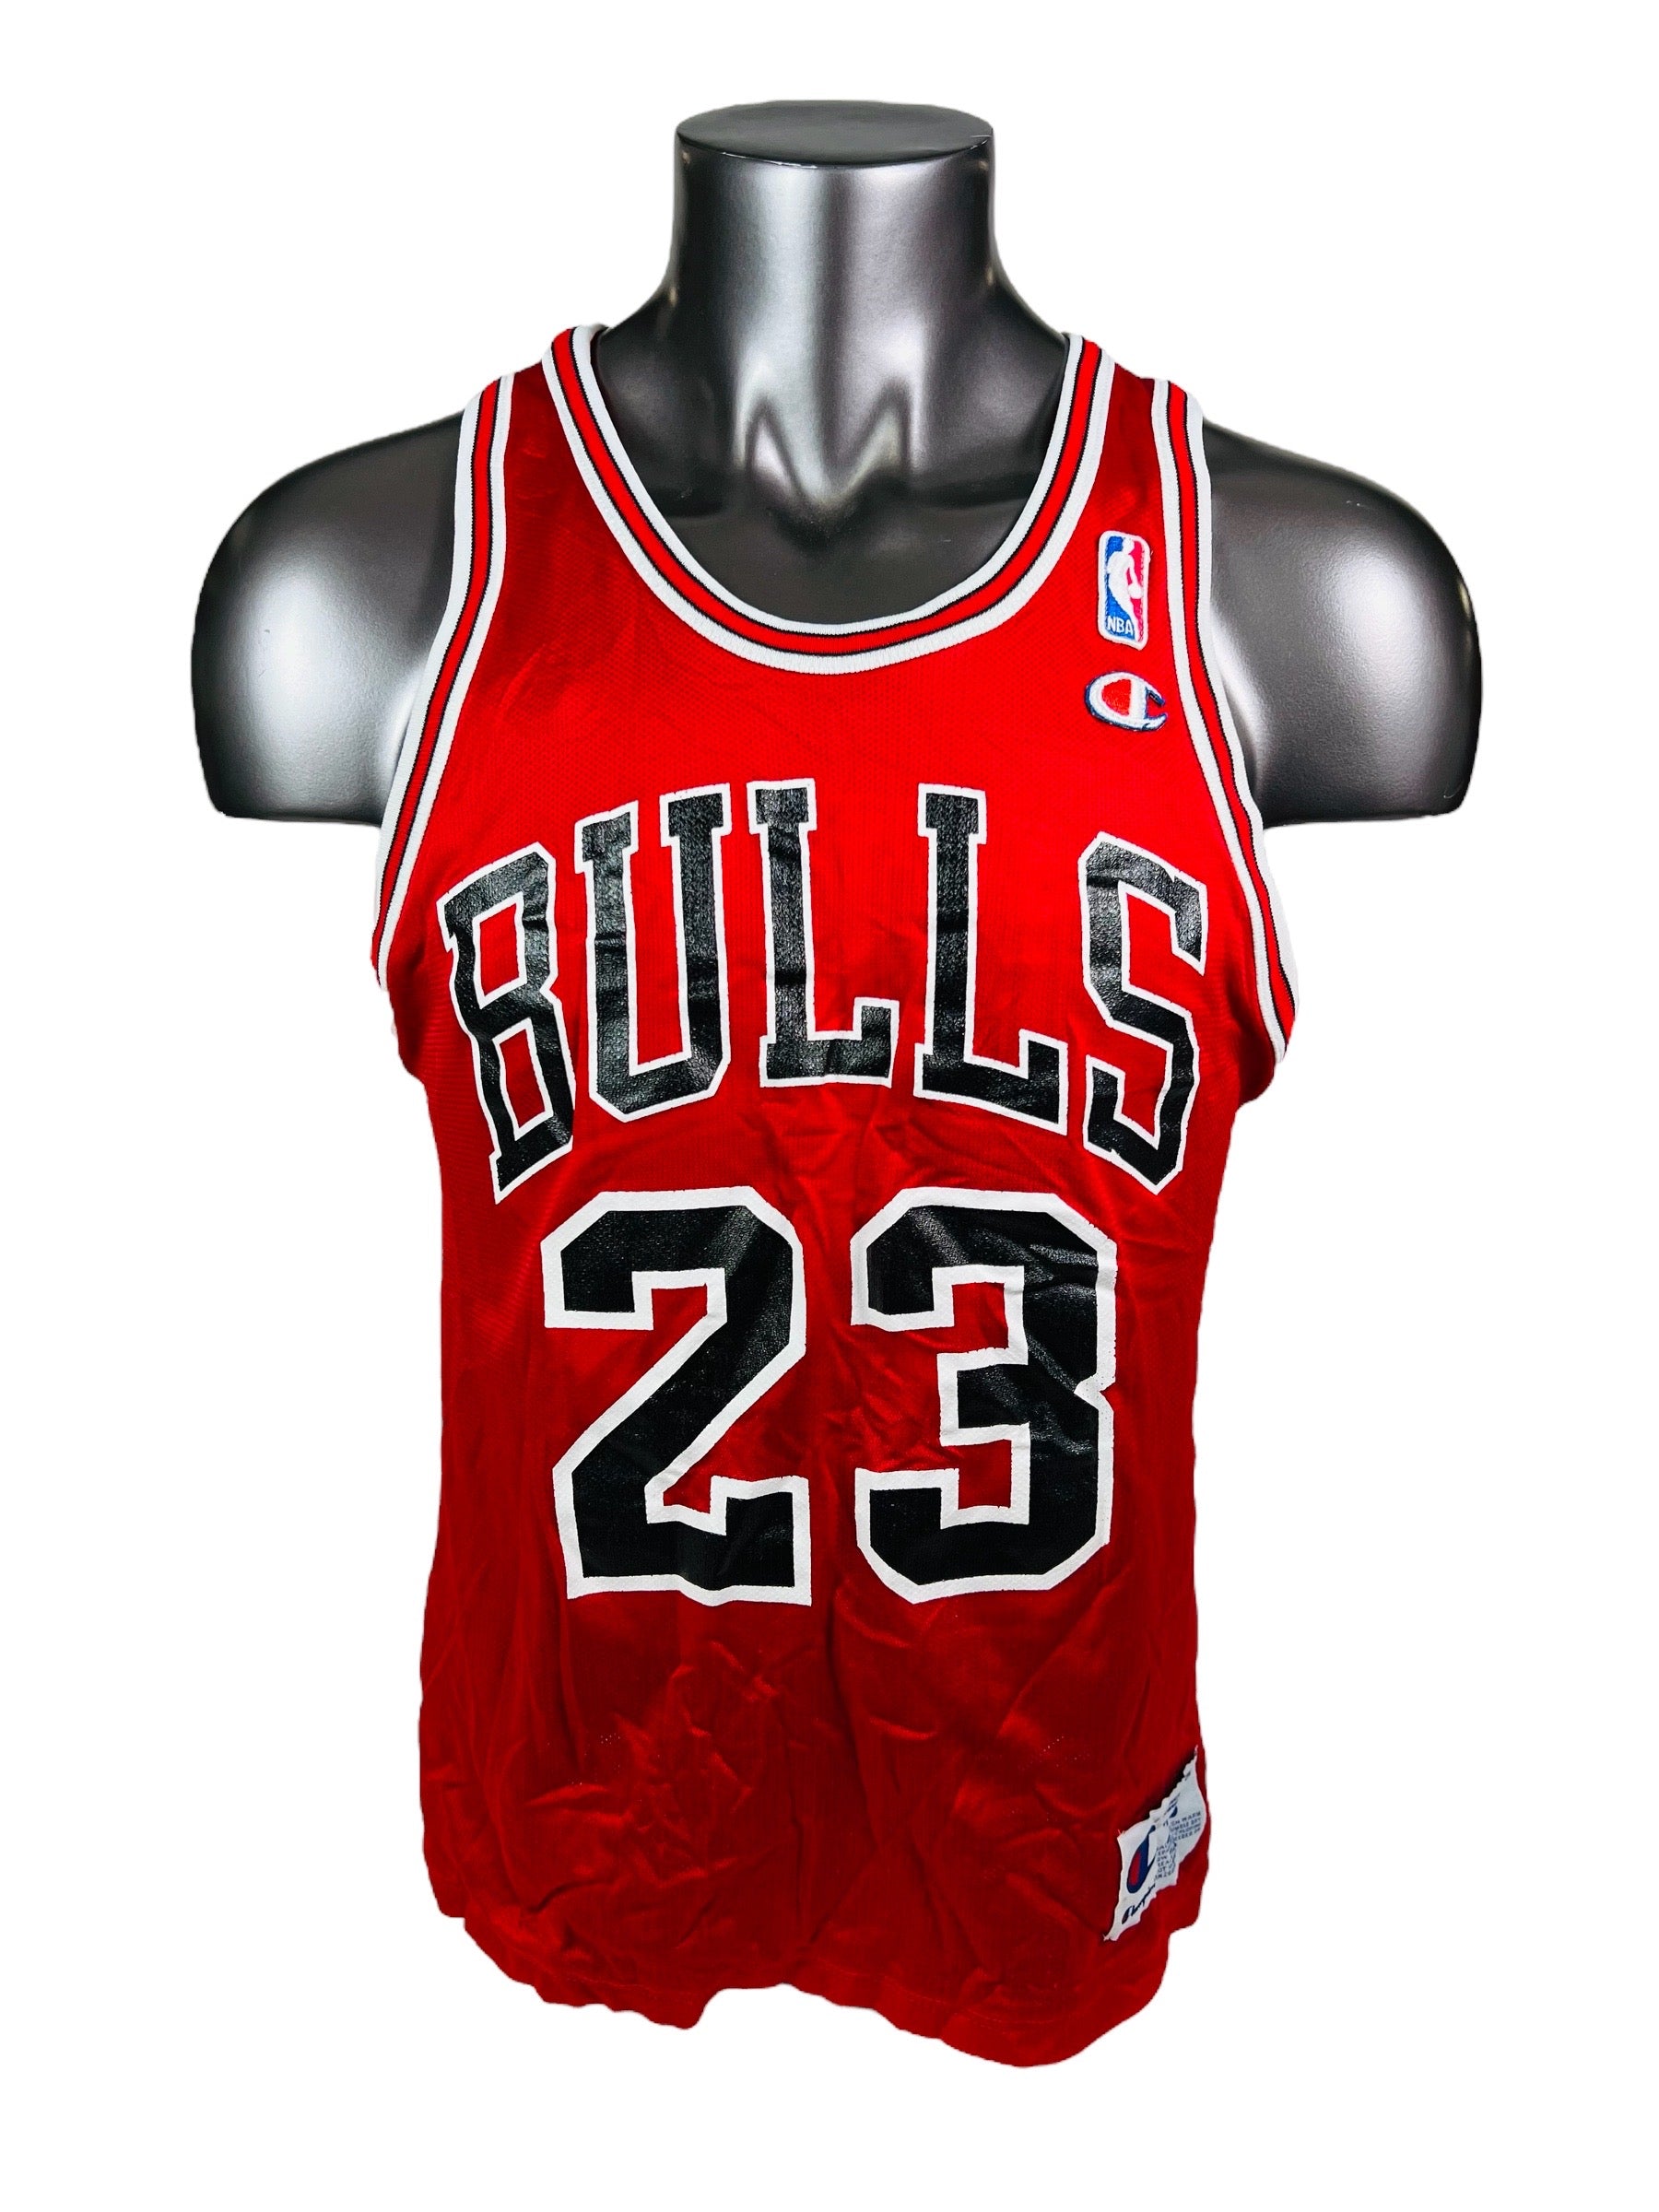 Michael Jordan Chicago Bulls Champion Vintage Basketball Jersey sz